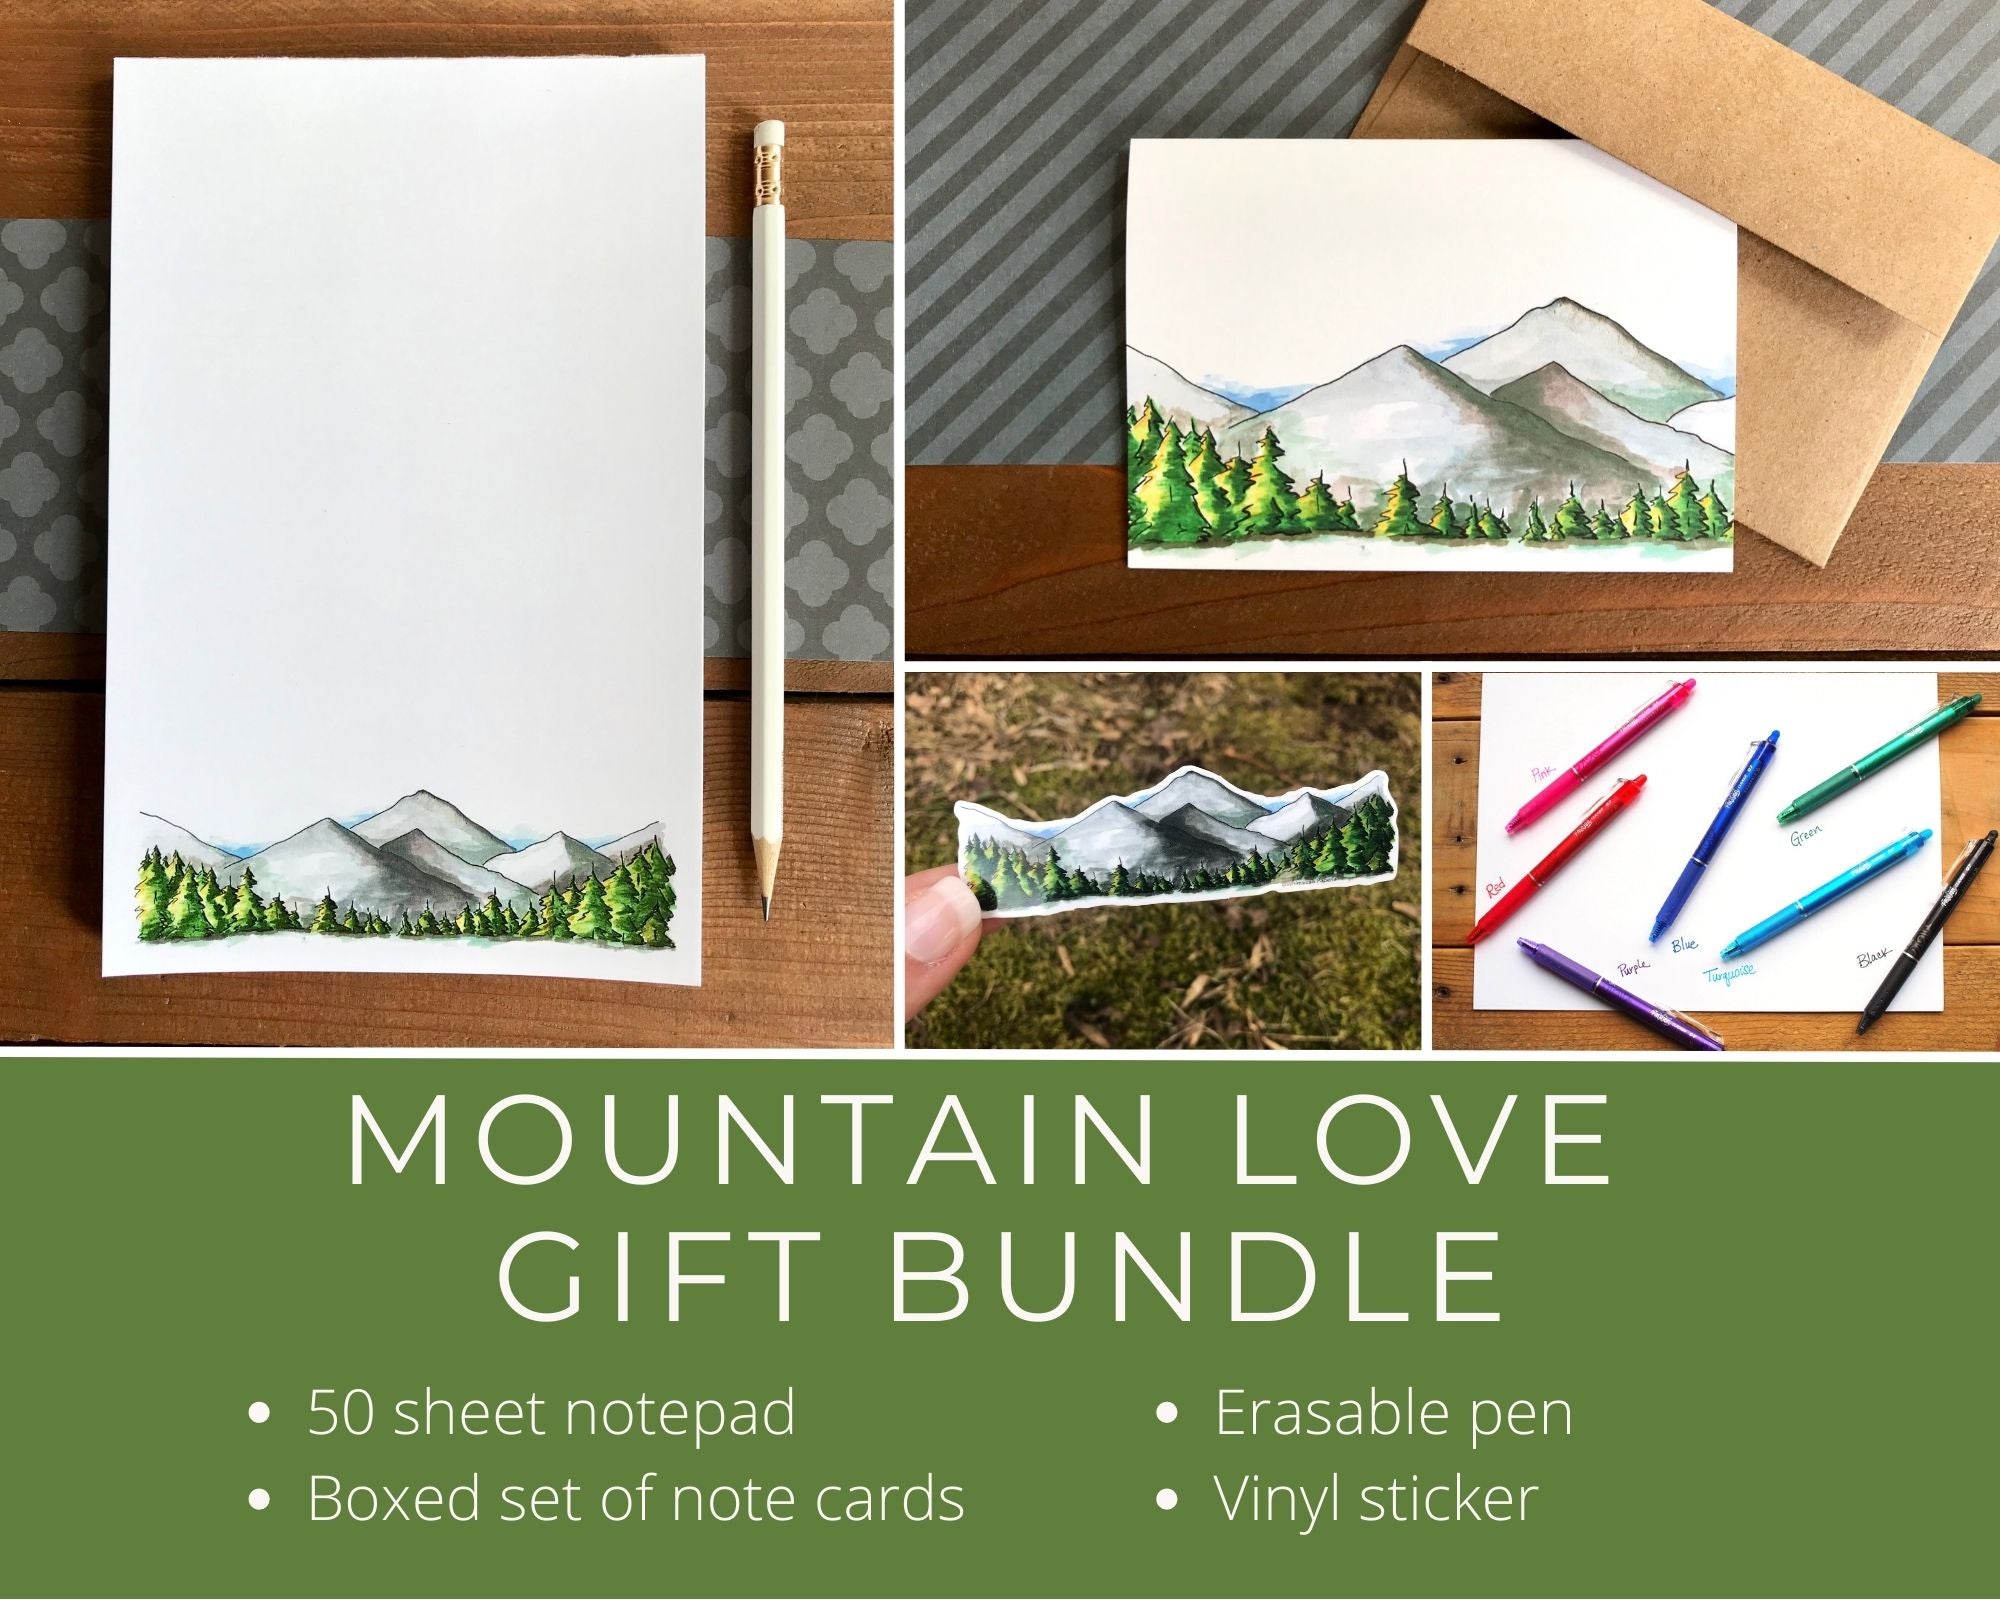 Mountain Love Stationery Set Gift Bundle